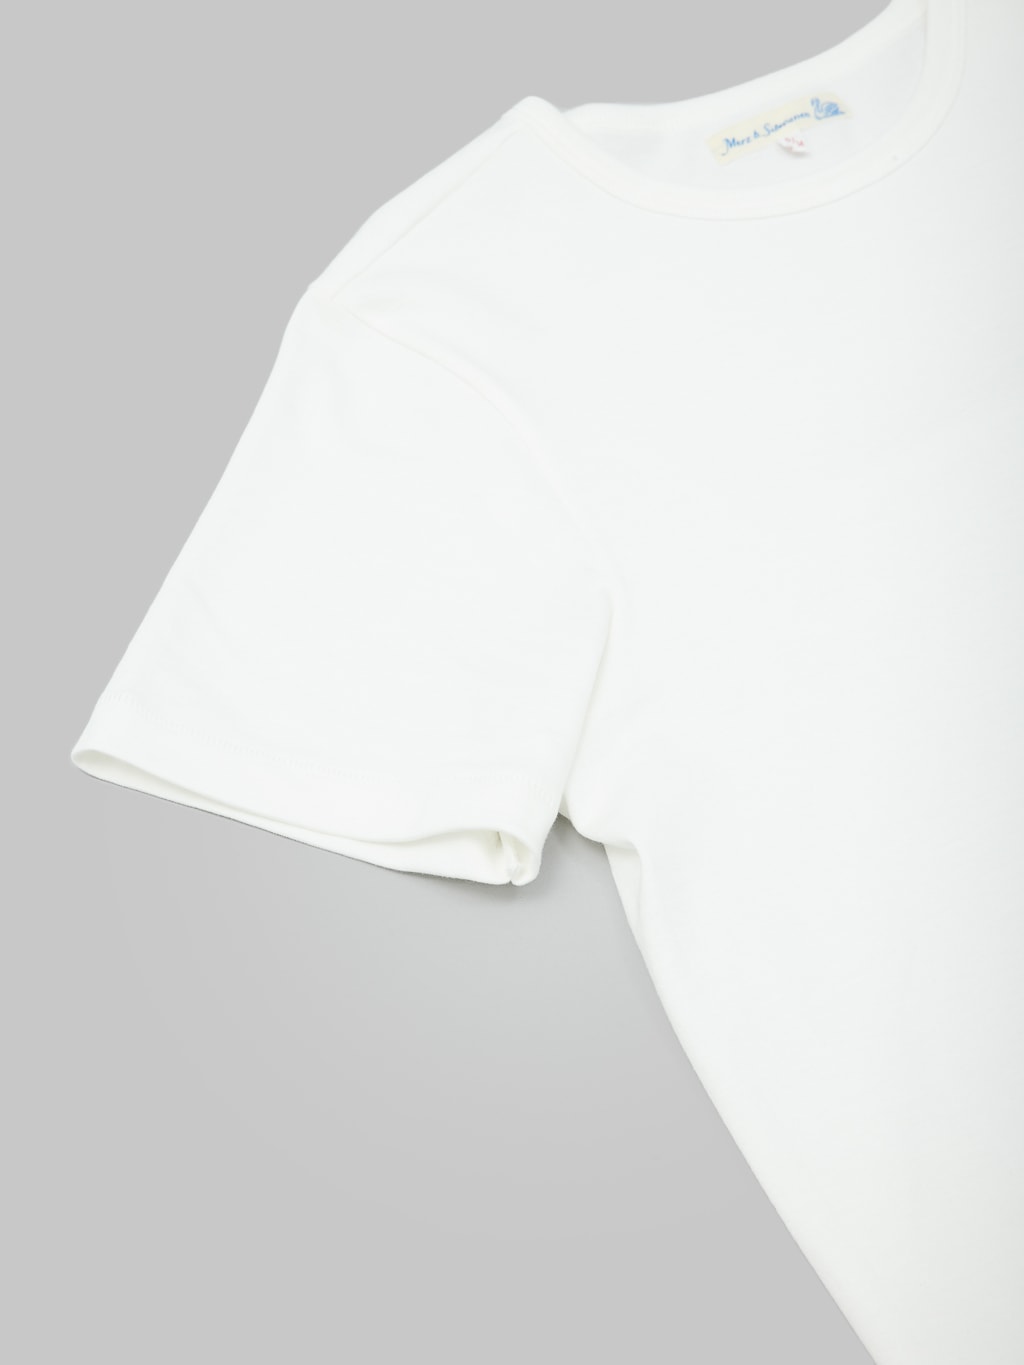 merz b schwanen good originals loopwheeled Tshirt classic white sleeve closeup